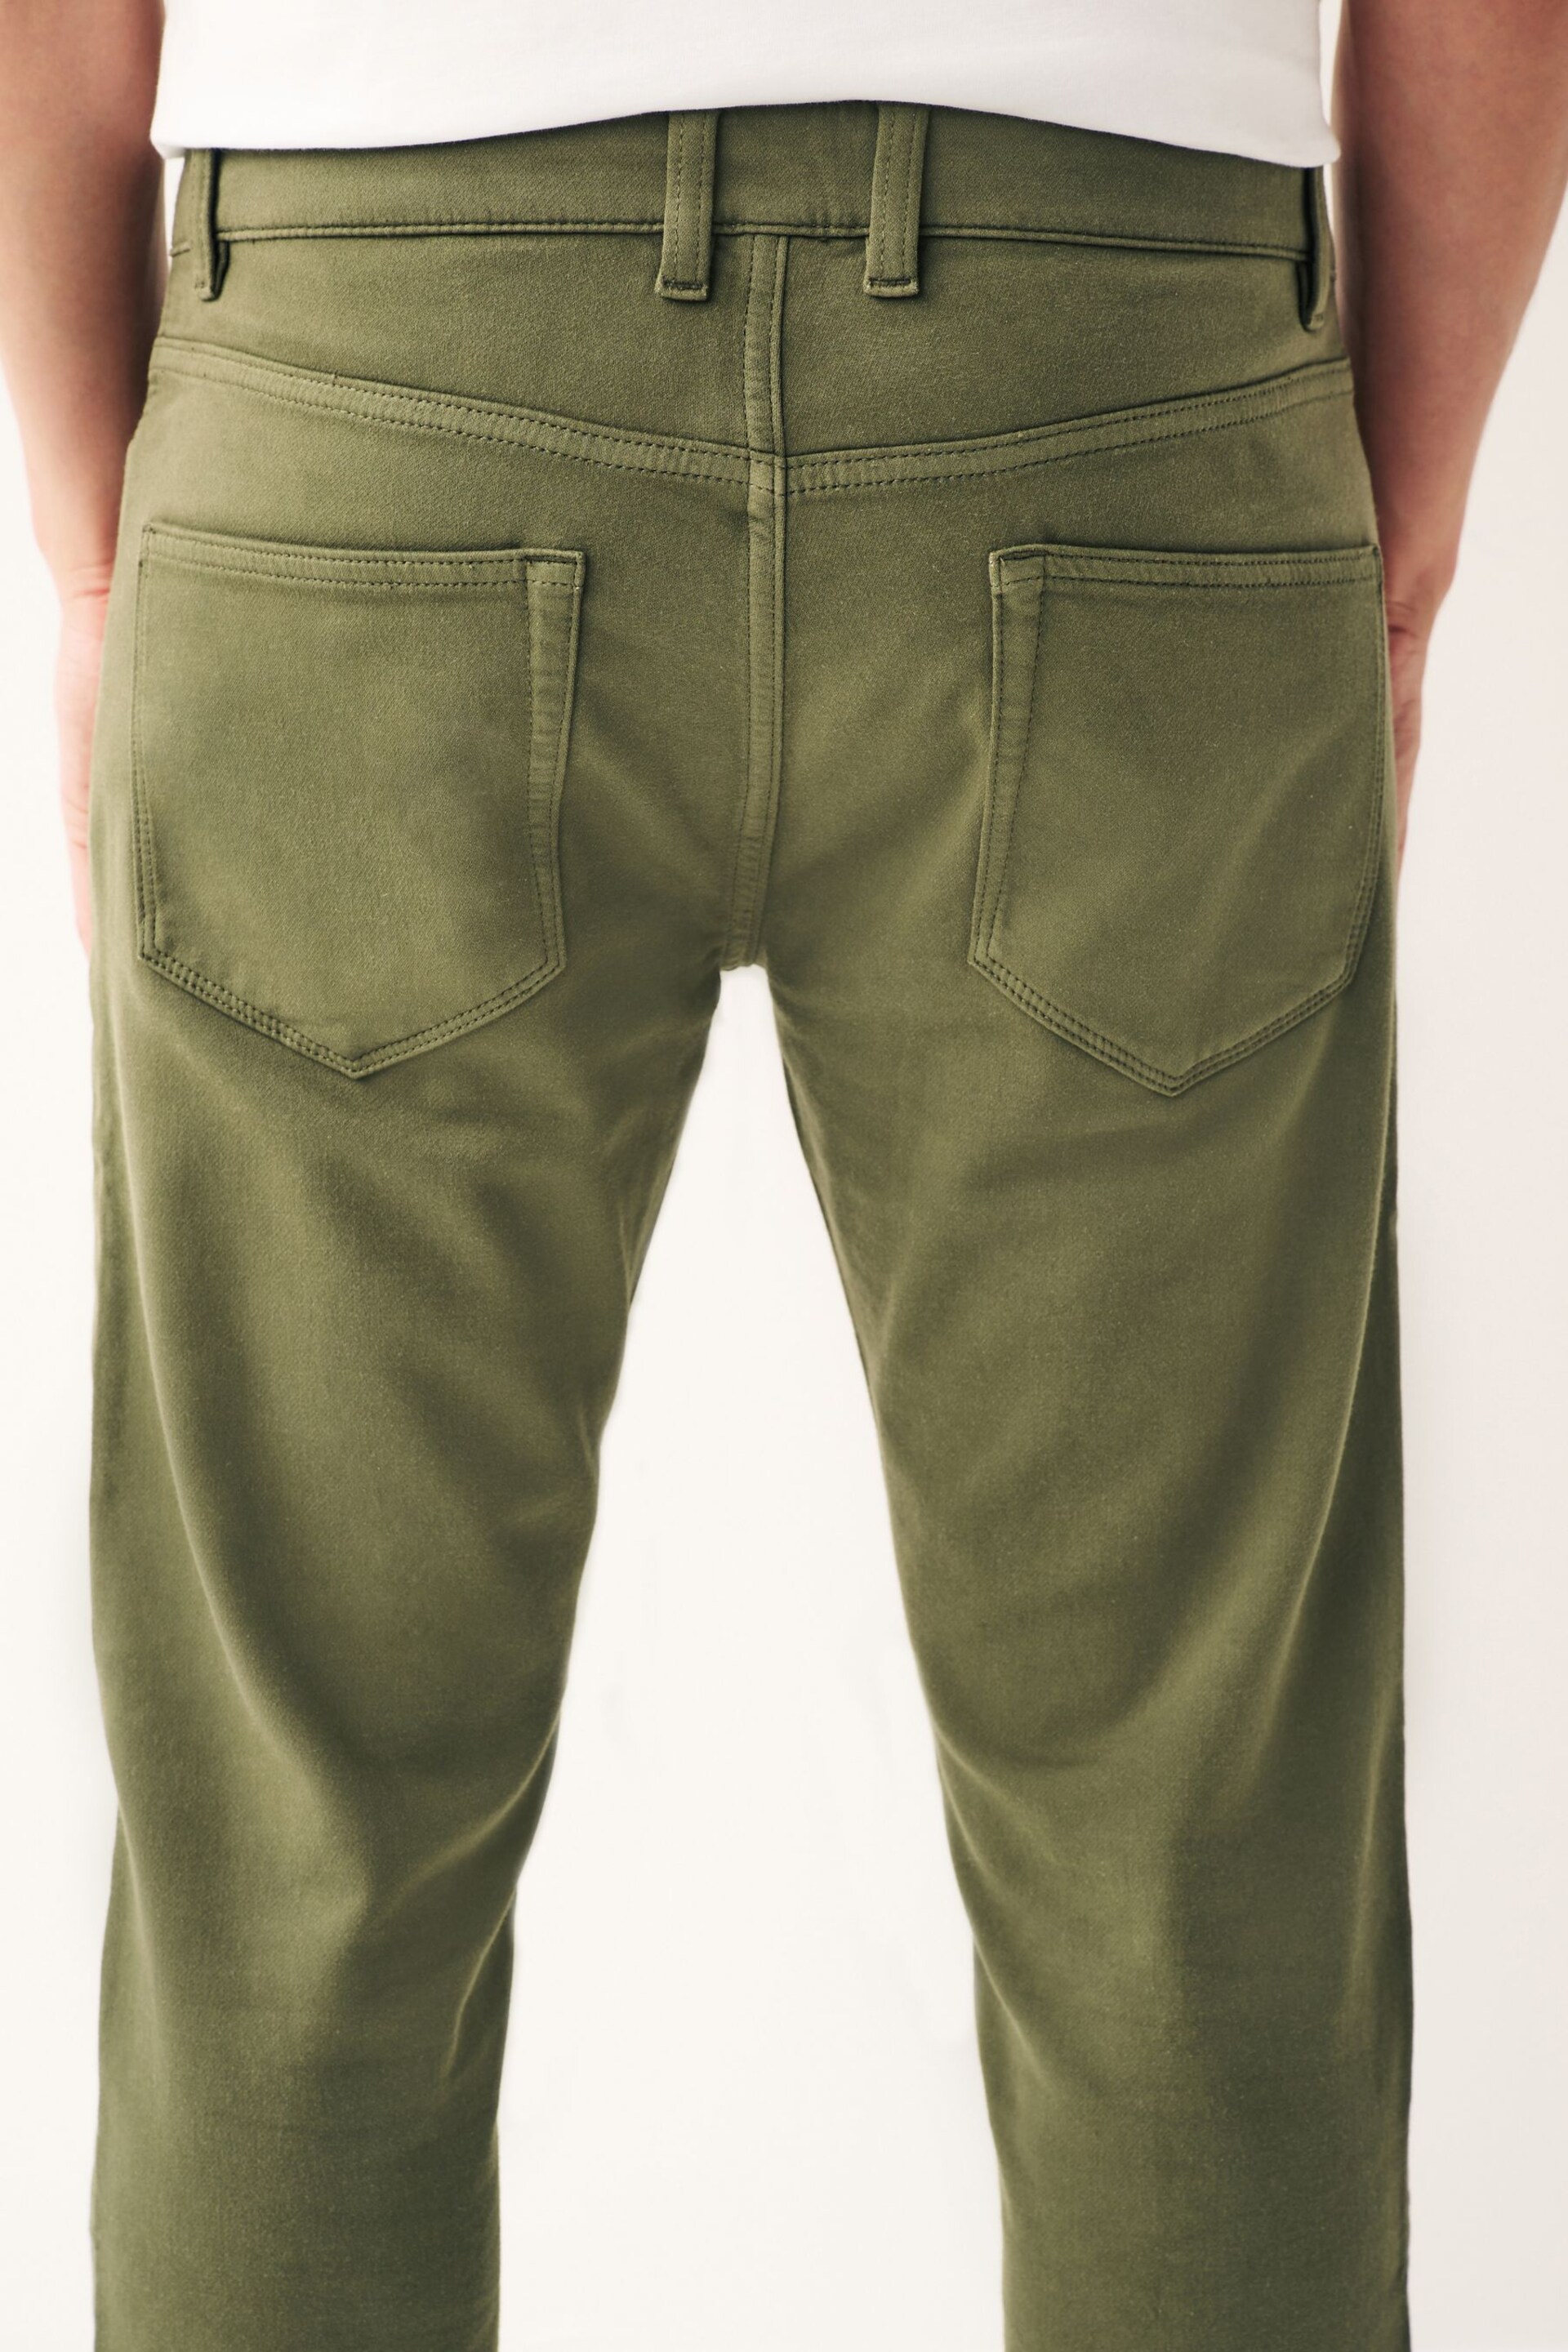 Green Sage Slim Fit Comfort Stretch Jeans - Image 5 of 5